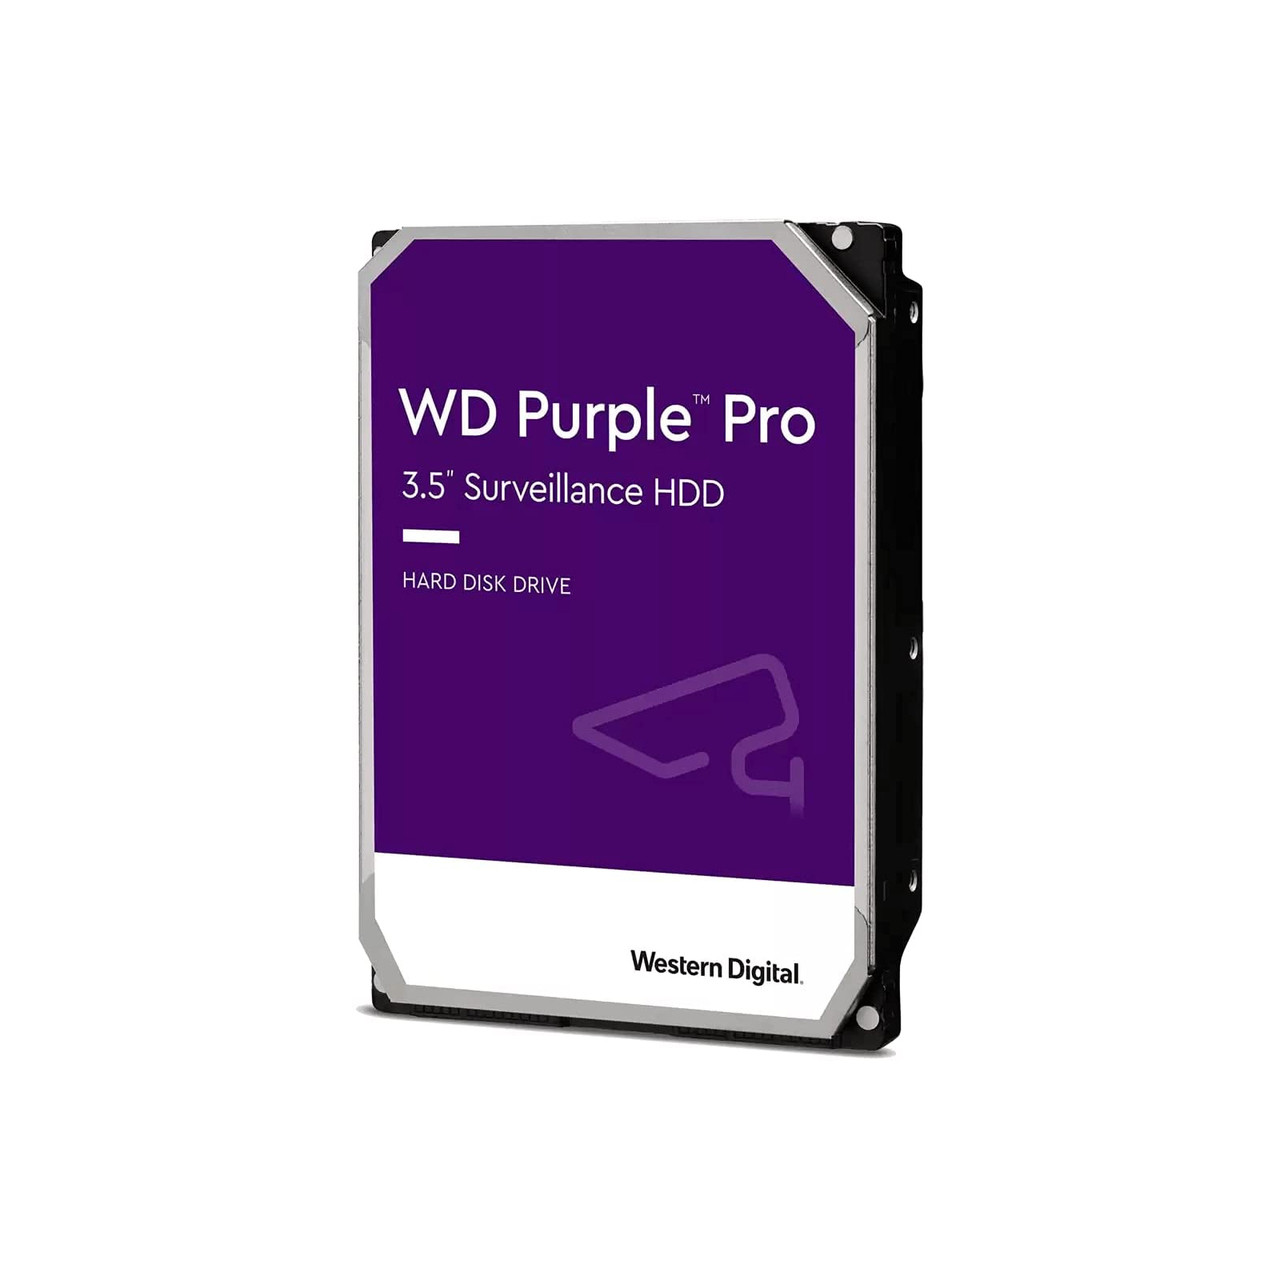 Pack of 6 WD Purple Pro Surveillance 18TB Internal Hard Drive HDD - 7200 RPM, SATA 6 Gb/s, 512 MB Cache, 3.5" WD181PURP